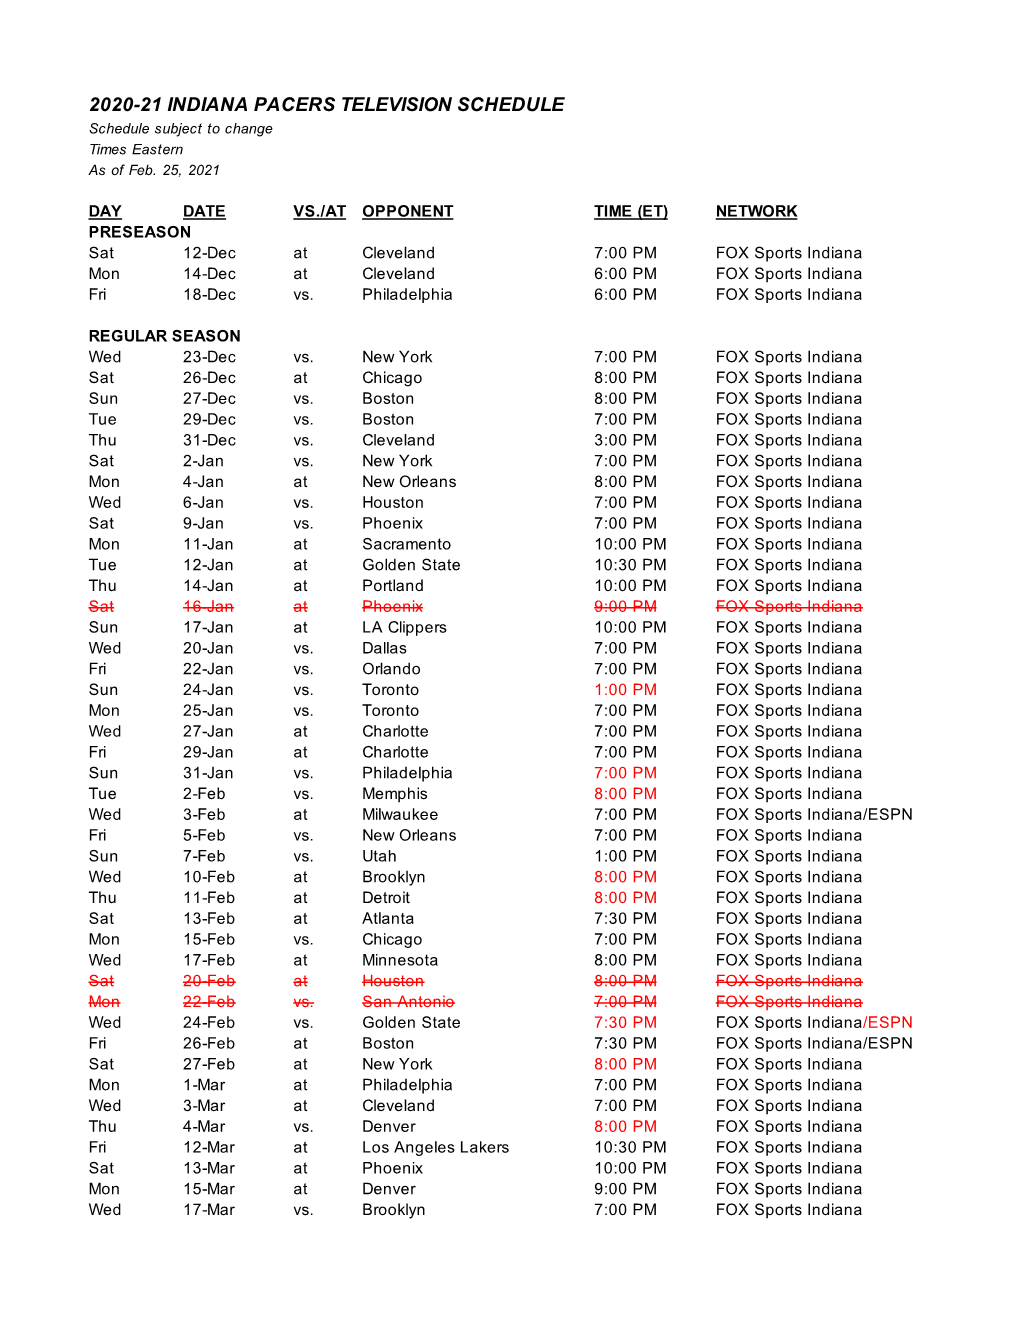 2020-21 Pacers TV Schedule-040121